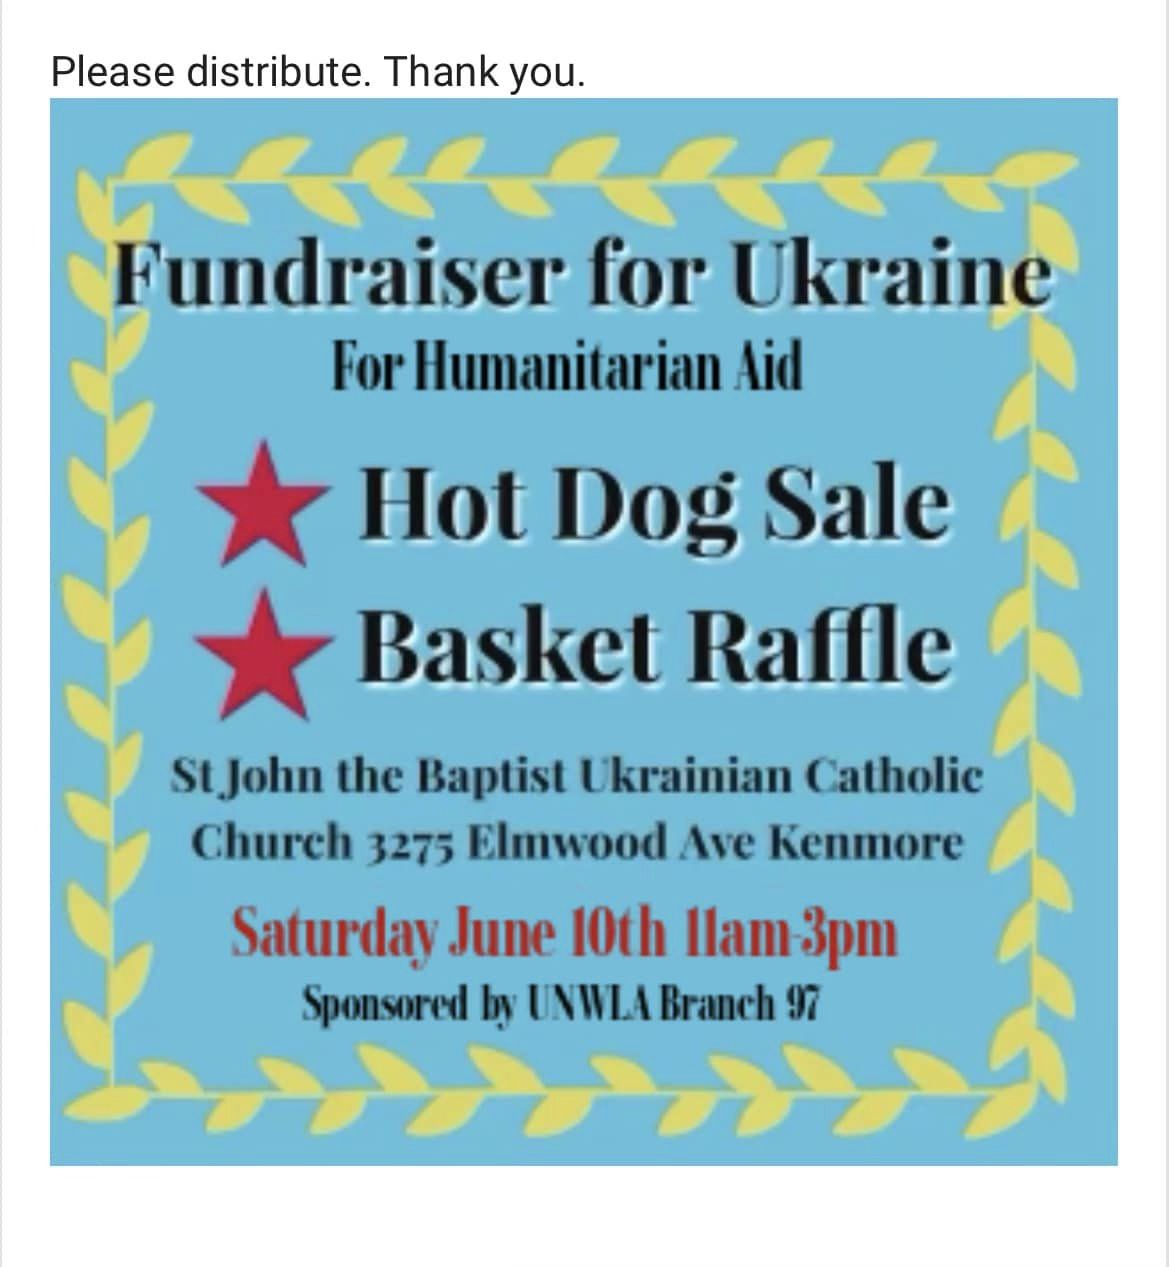 hot-dog-fundraiser.jpg - 101.04 kB